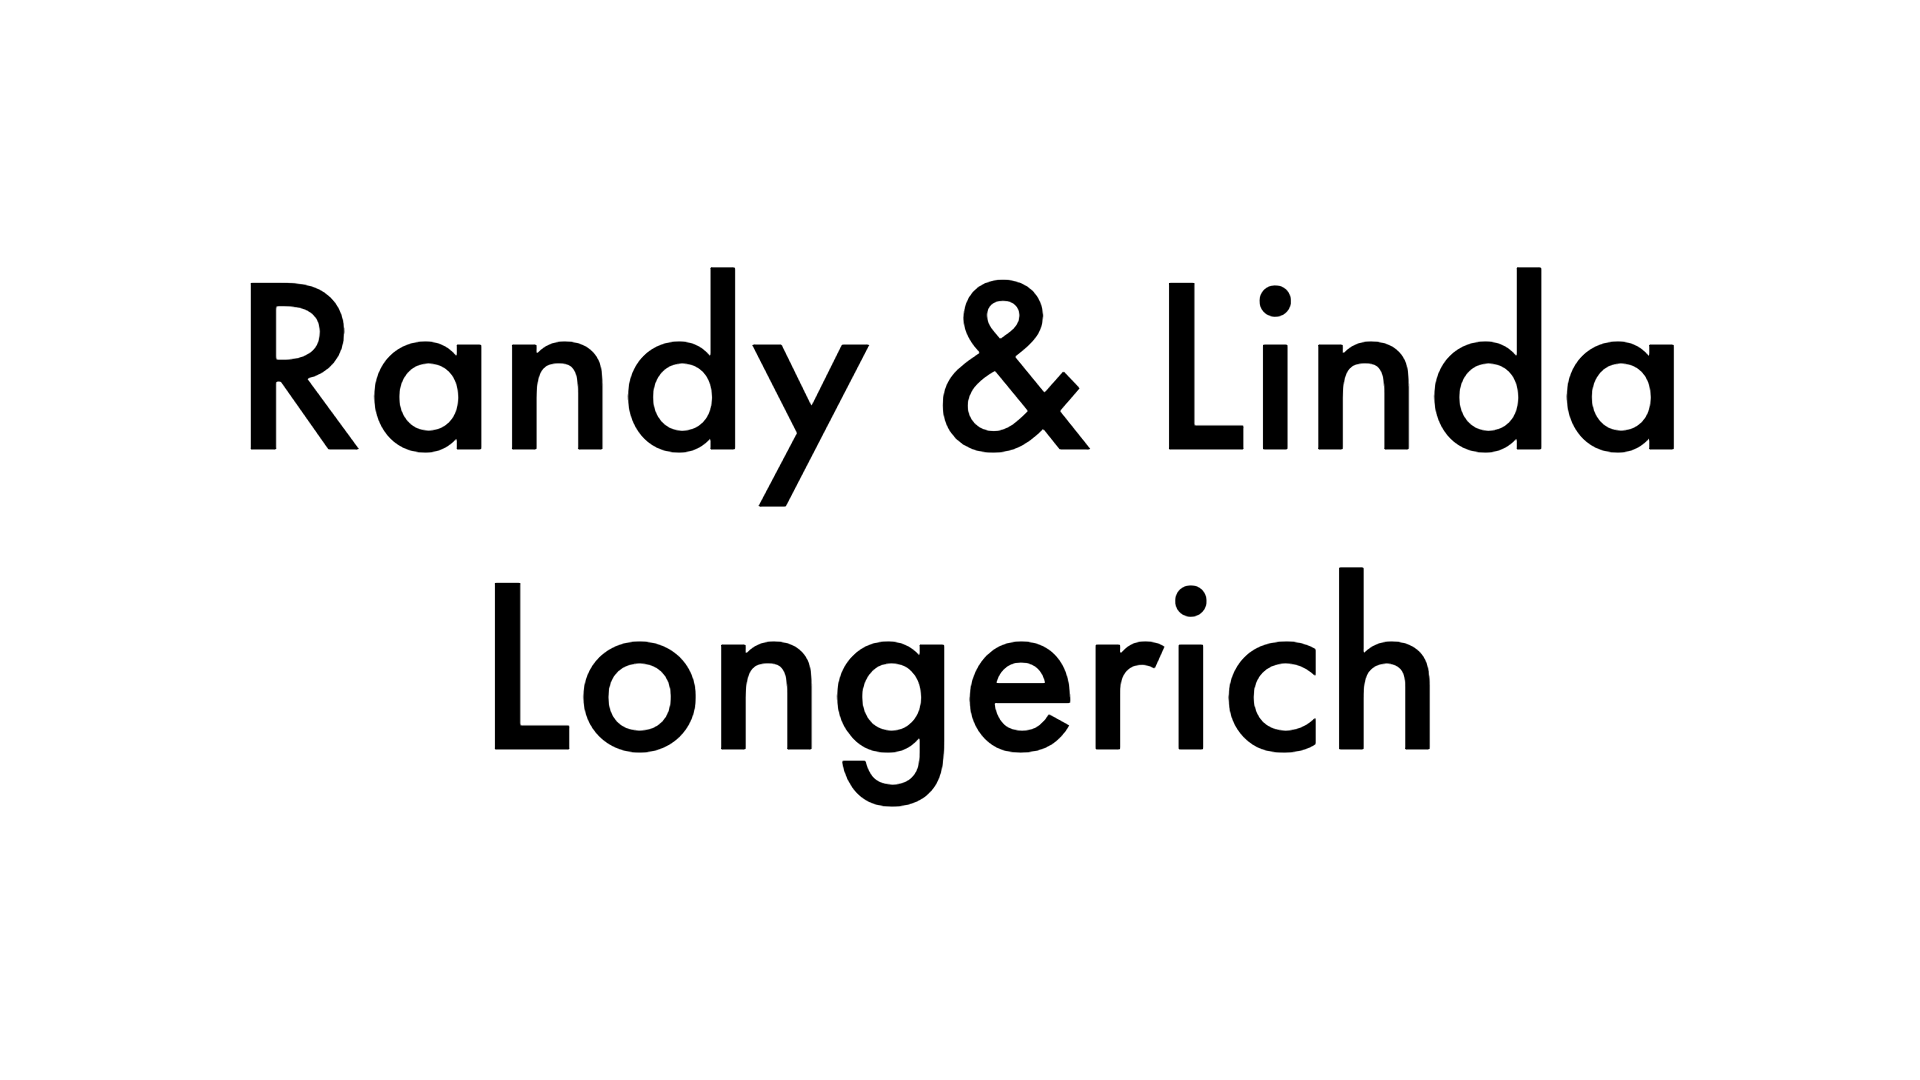 Randy & Linda Longerich